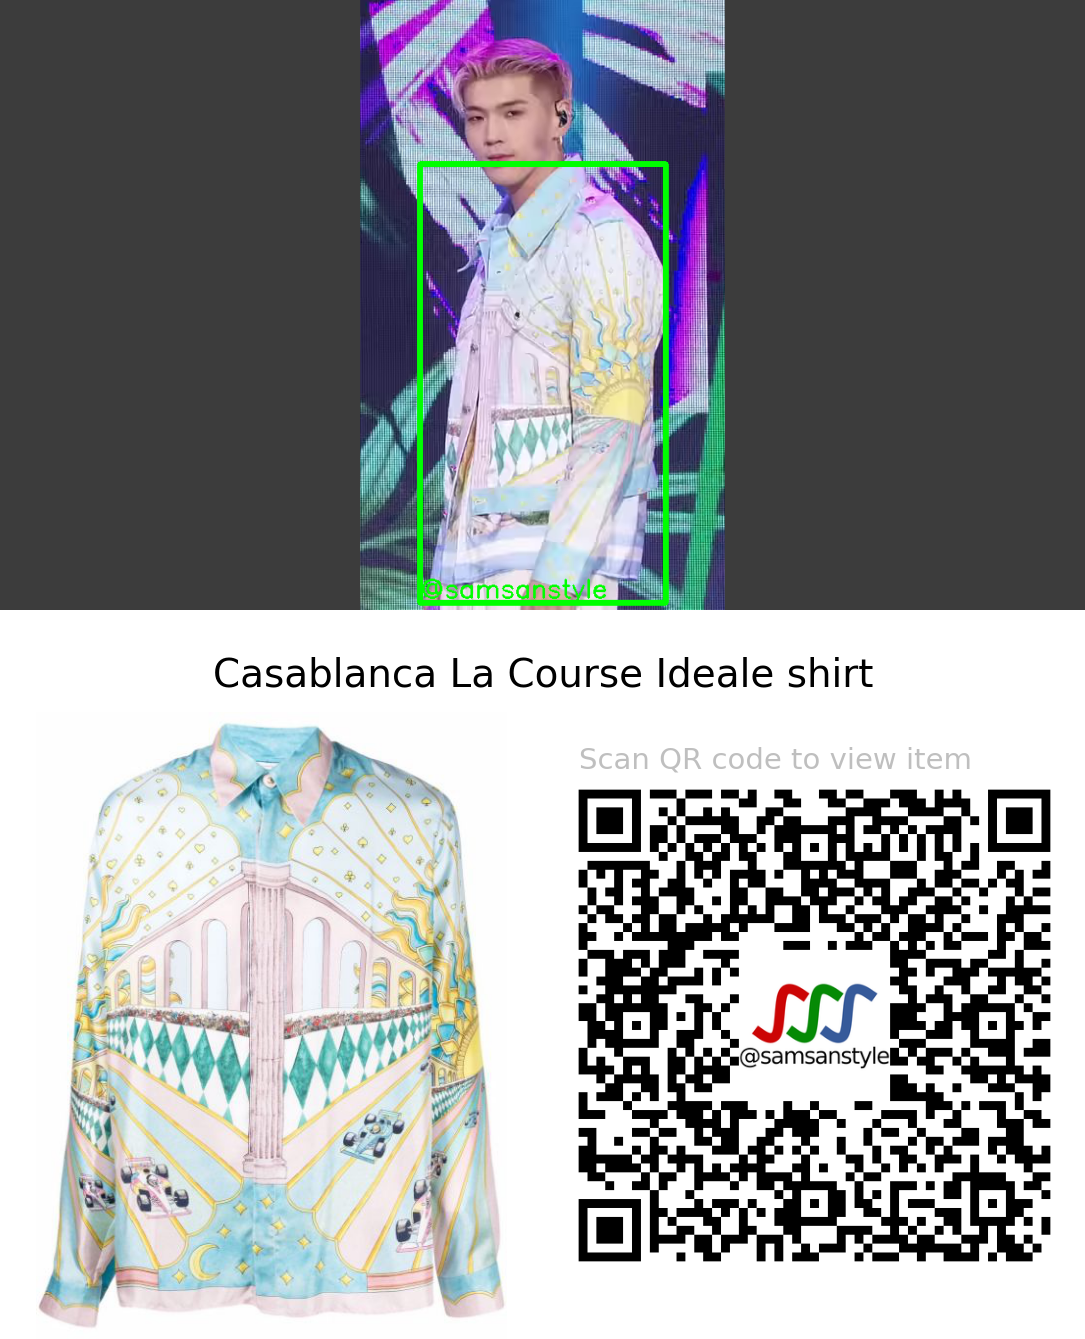 KARD BM | Ring The Alarm SBS MTV The Show | Casablanca La Course Ideale shirt